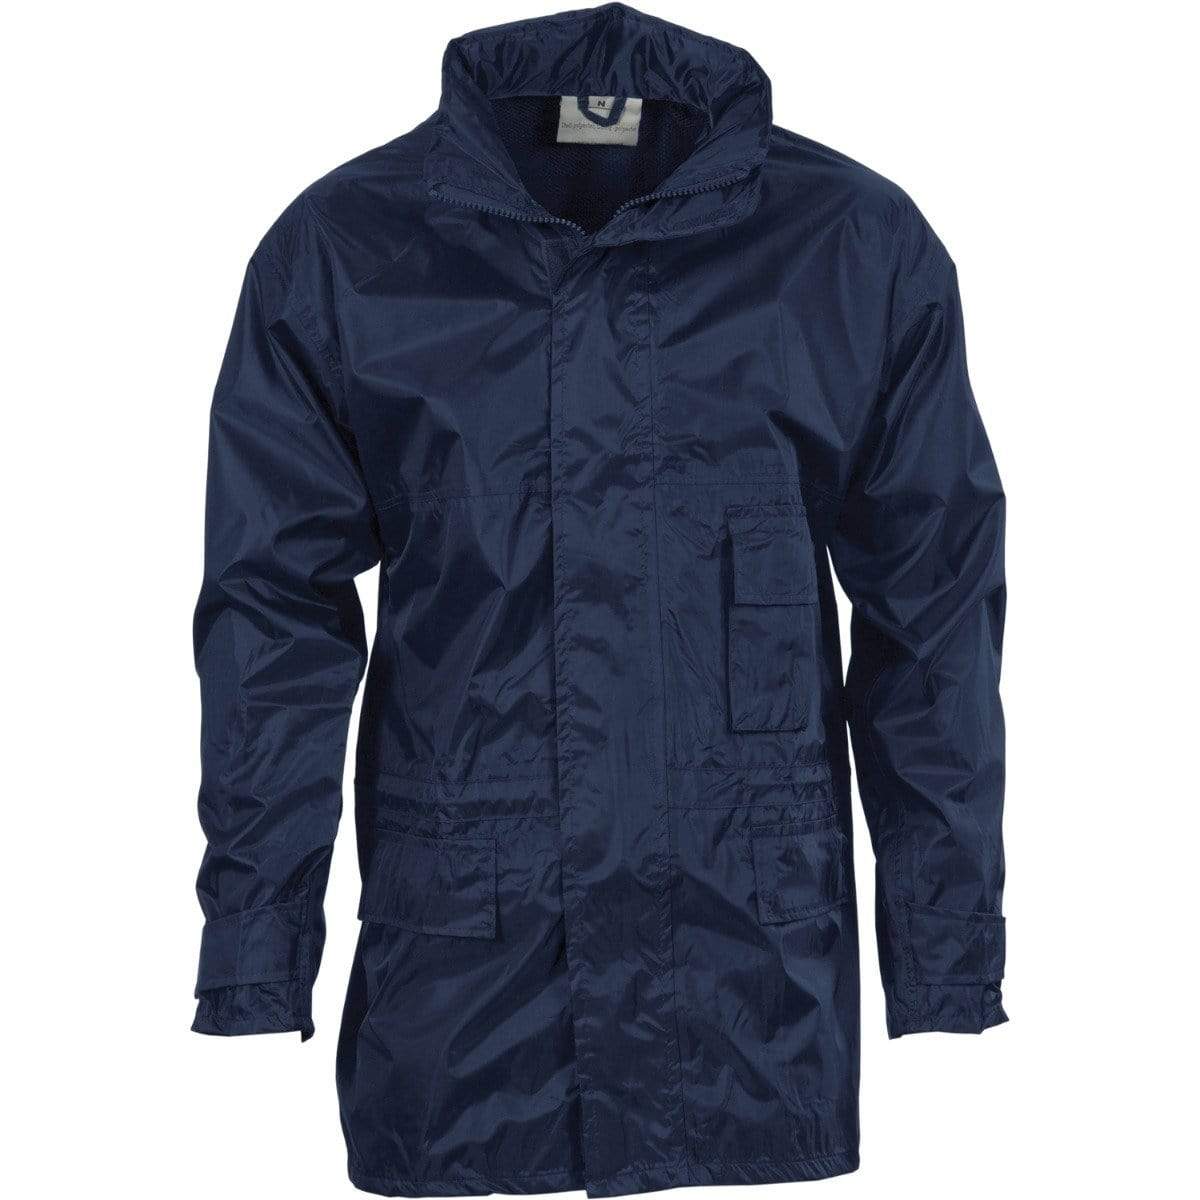 Dnc Workwear Classic Rain Jacket - 3706 Work Wear DNC Workwear Navy 6XL 